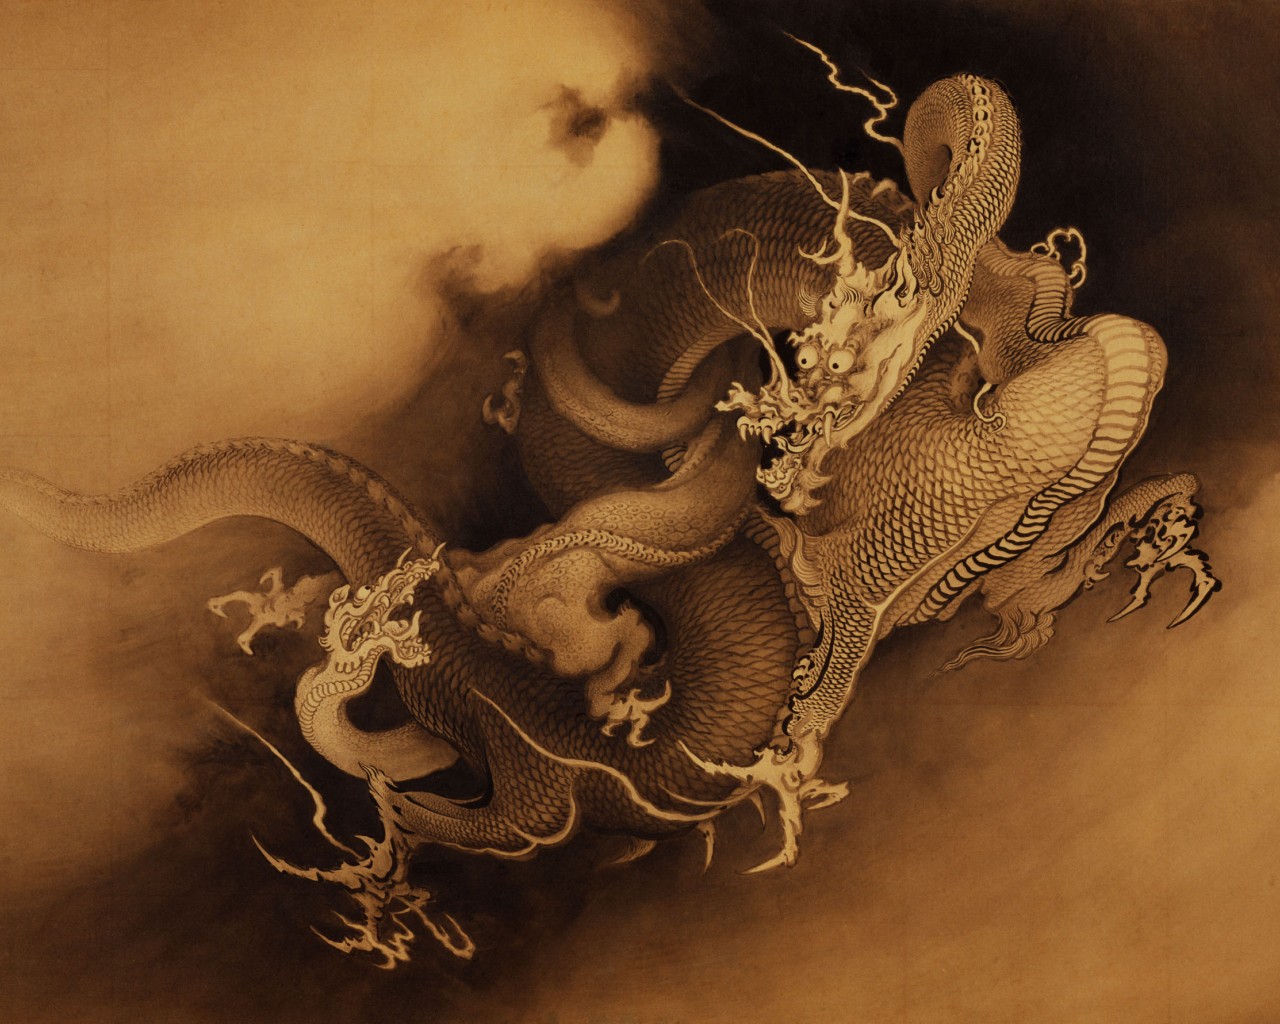 Previous, Drawn wallpapers - Chinese Dragon wallpaper